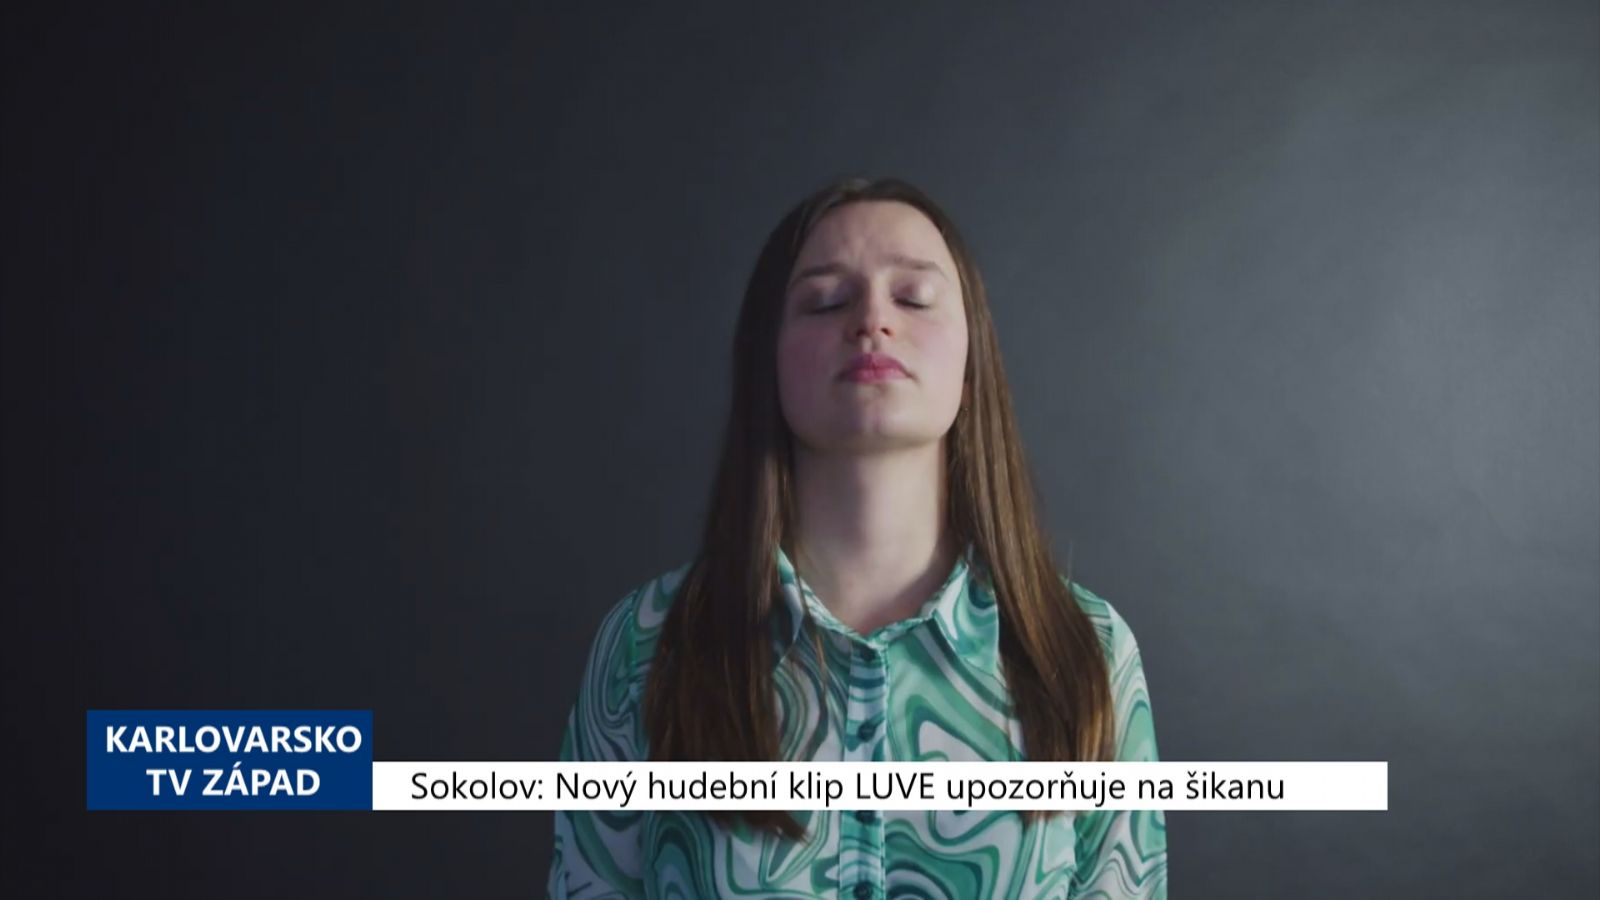 Sokolov: Nový hudební klip LUVE upozorňuje na šikanu (TV Západ)